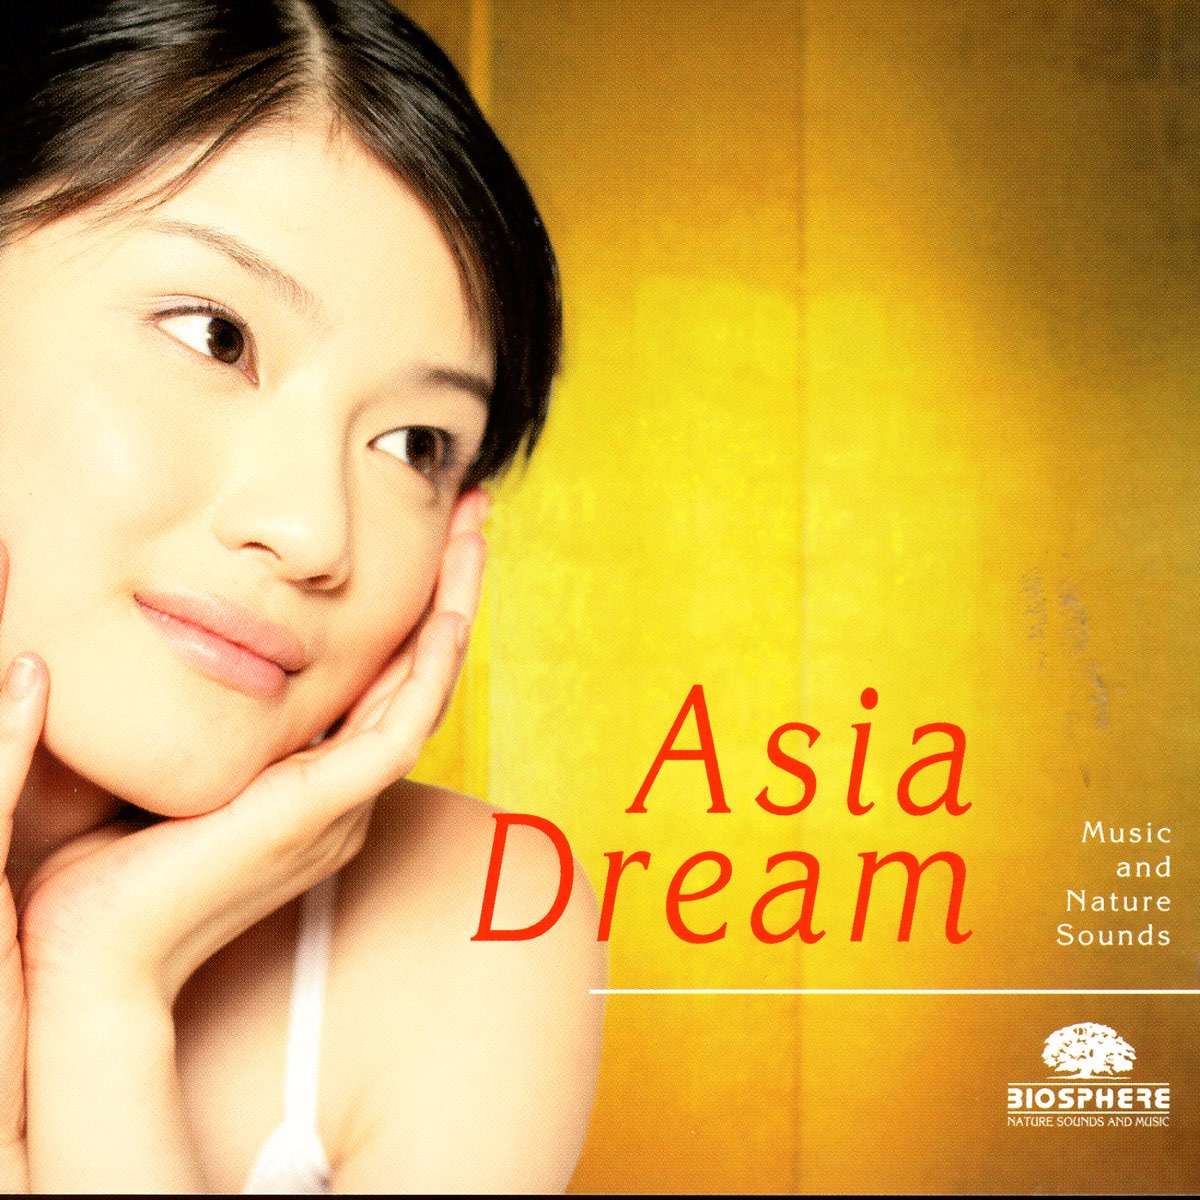 Asia песня